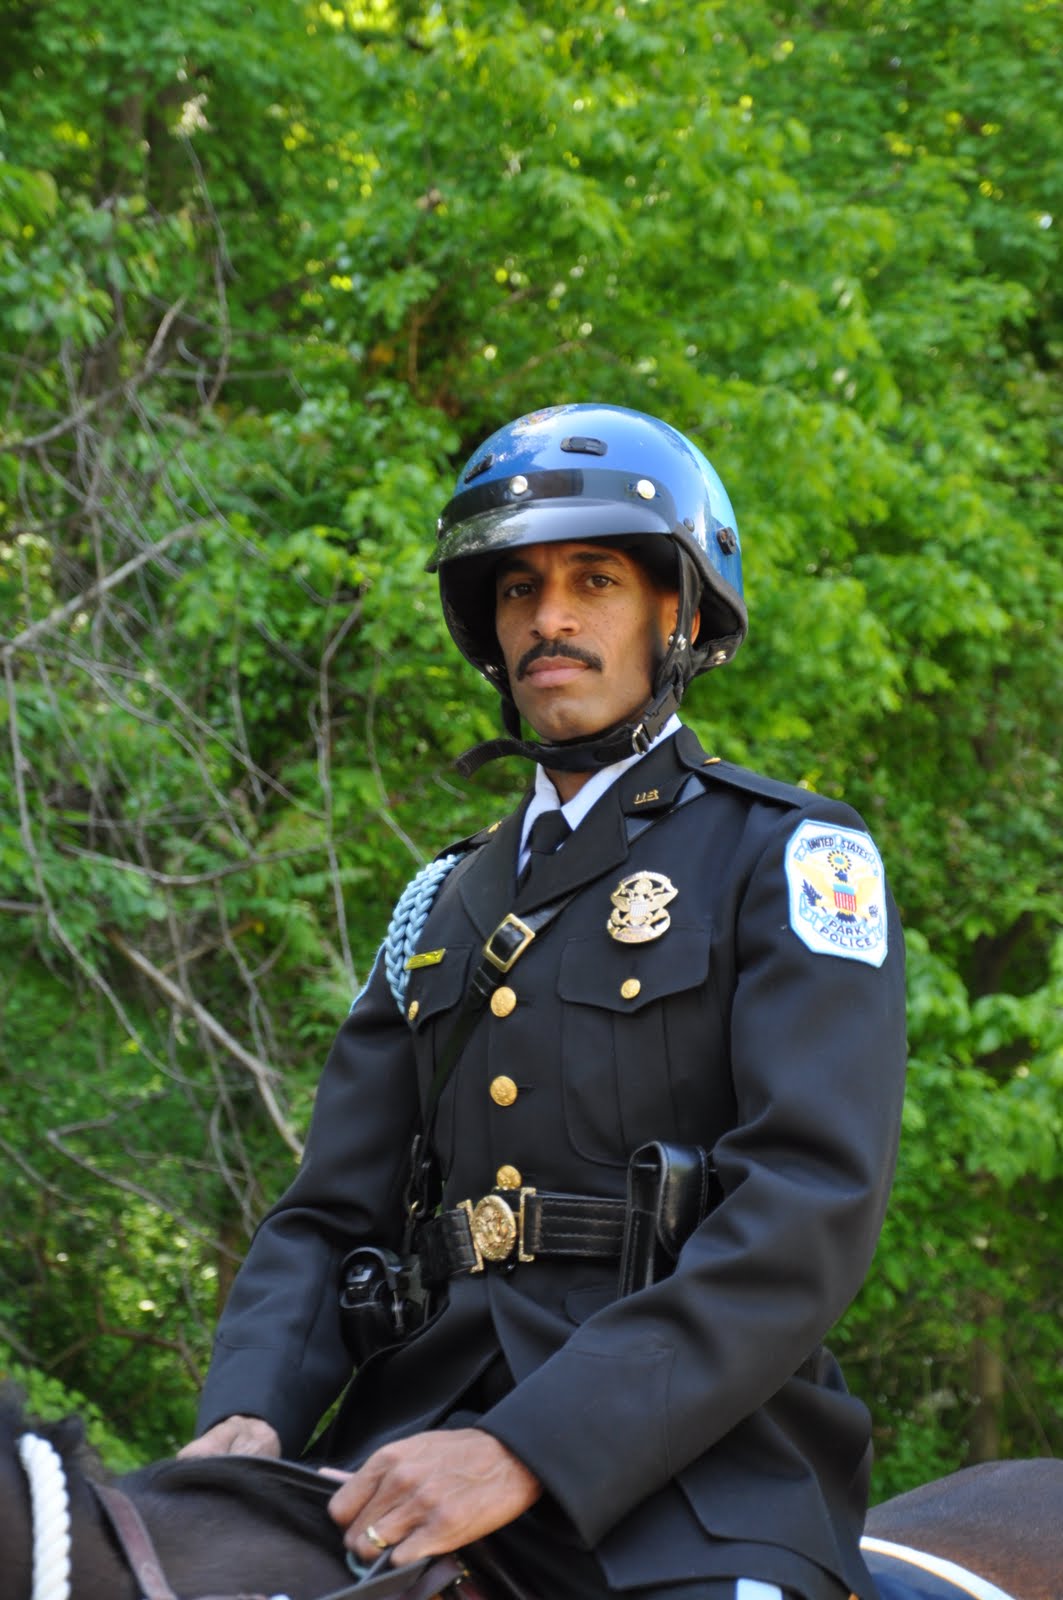 United States Park Police